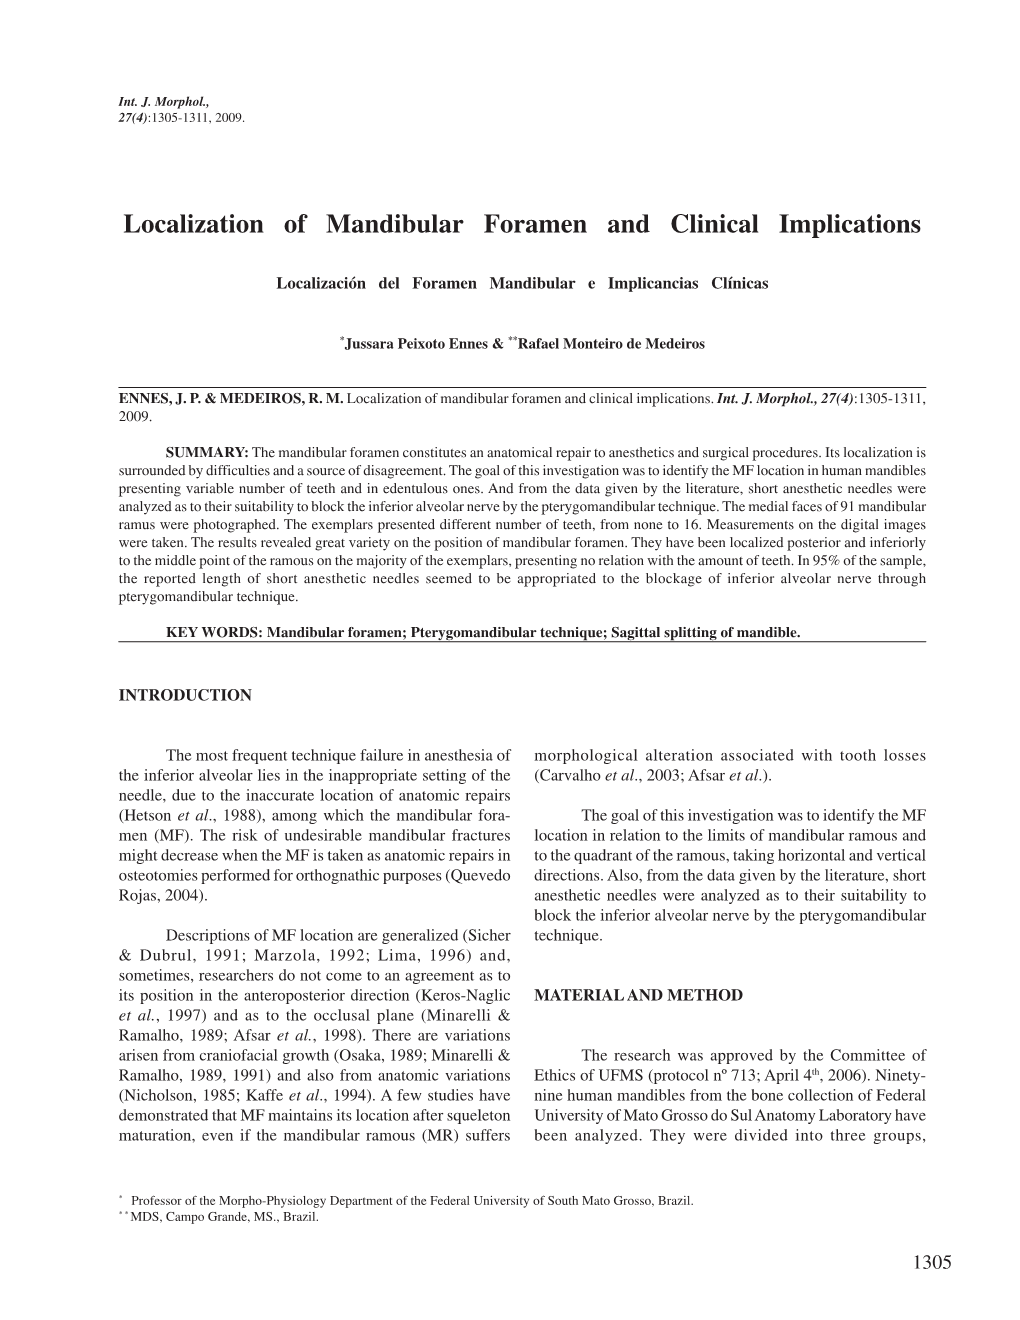 Localization of Mandibular Foramen and Clinical Implications